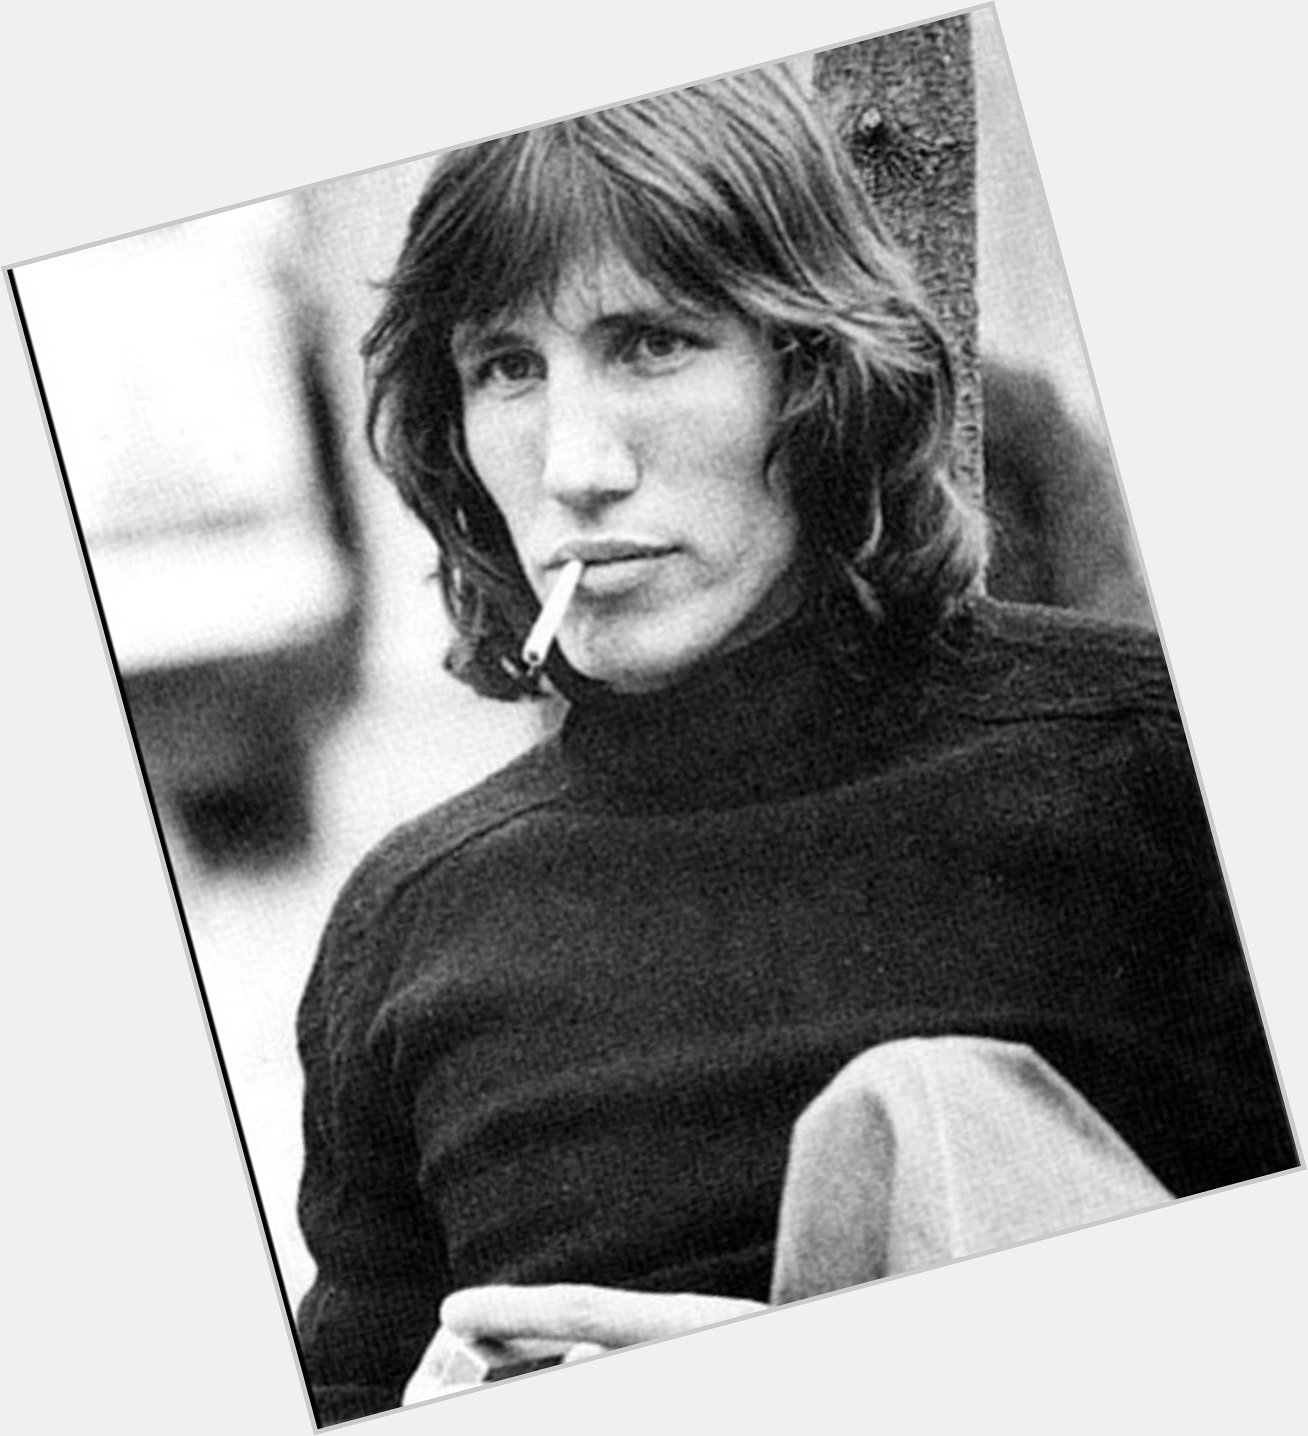 Happy birthday Roger Waters 